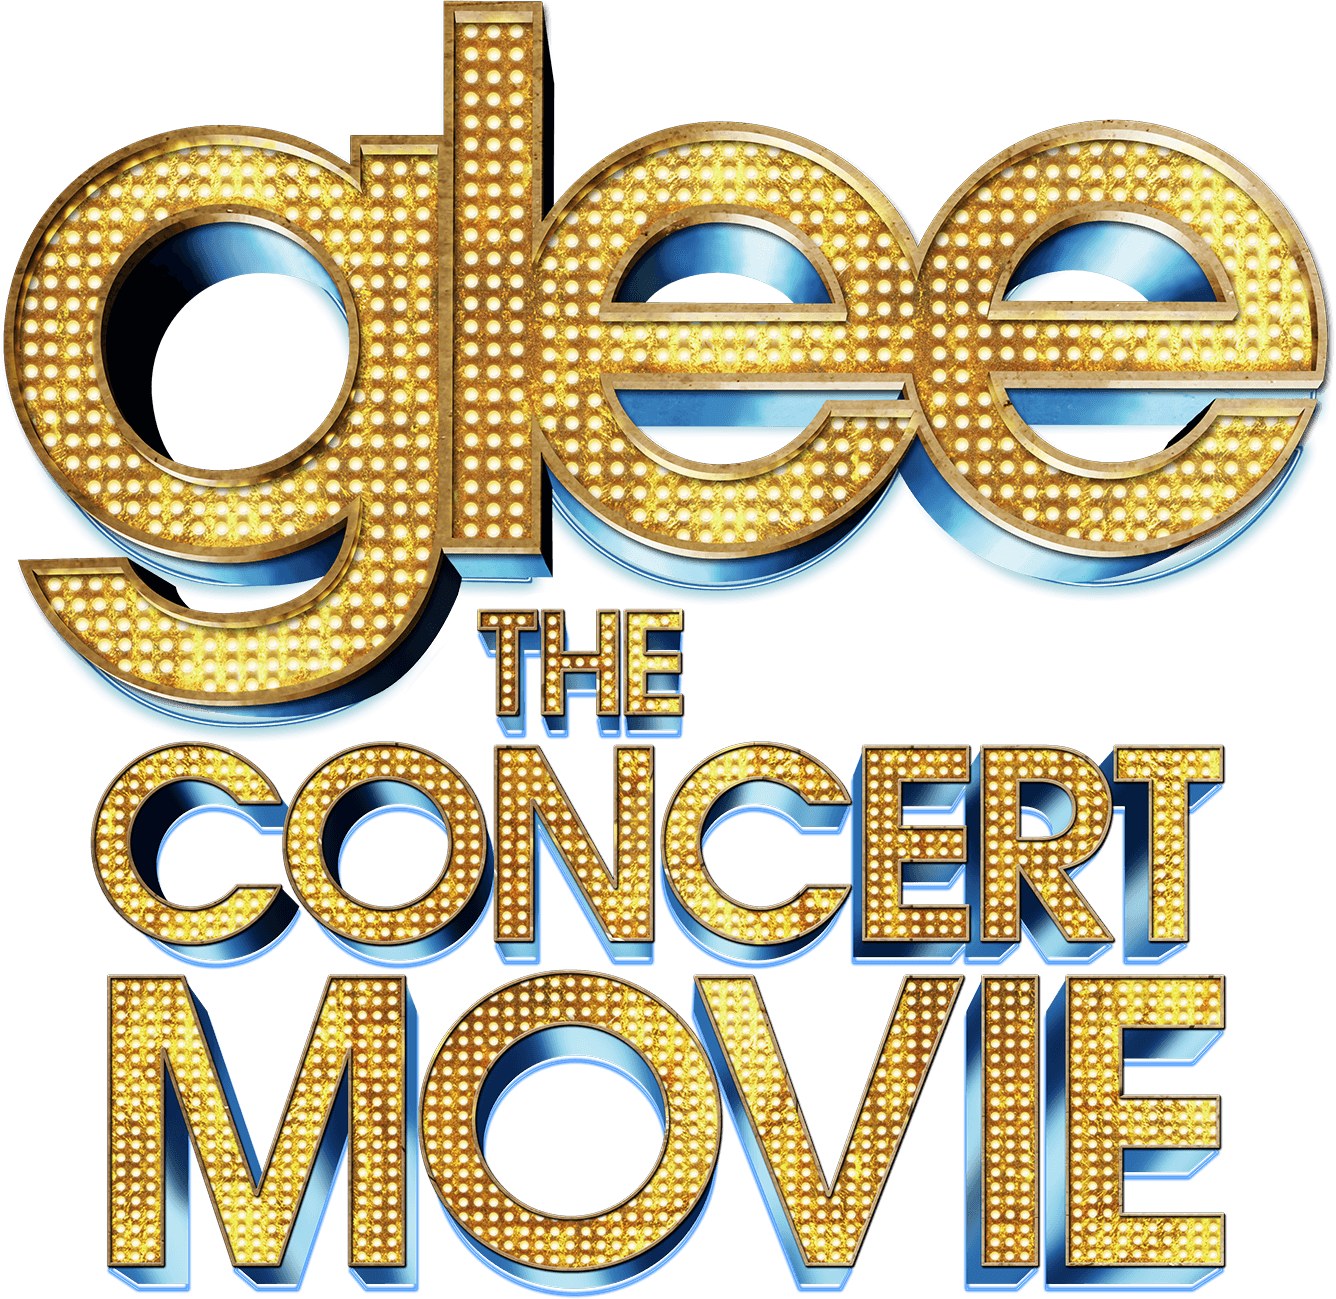 Glee: The Concert Movie logo